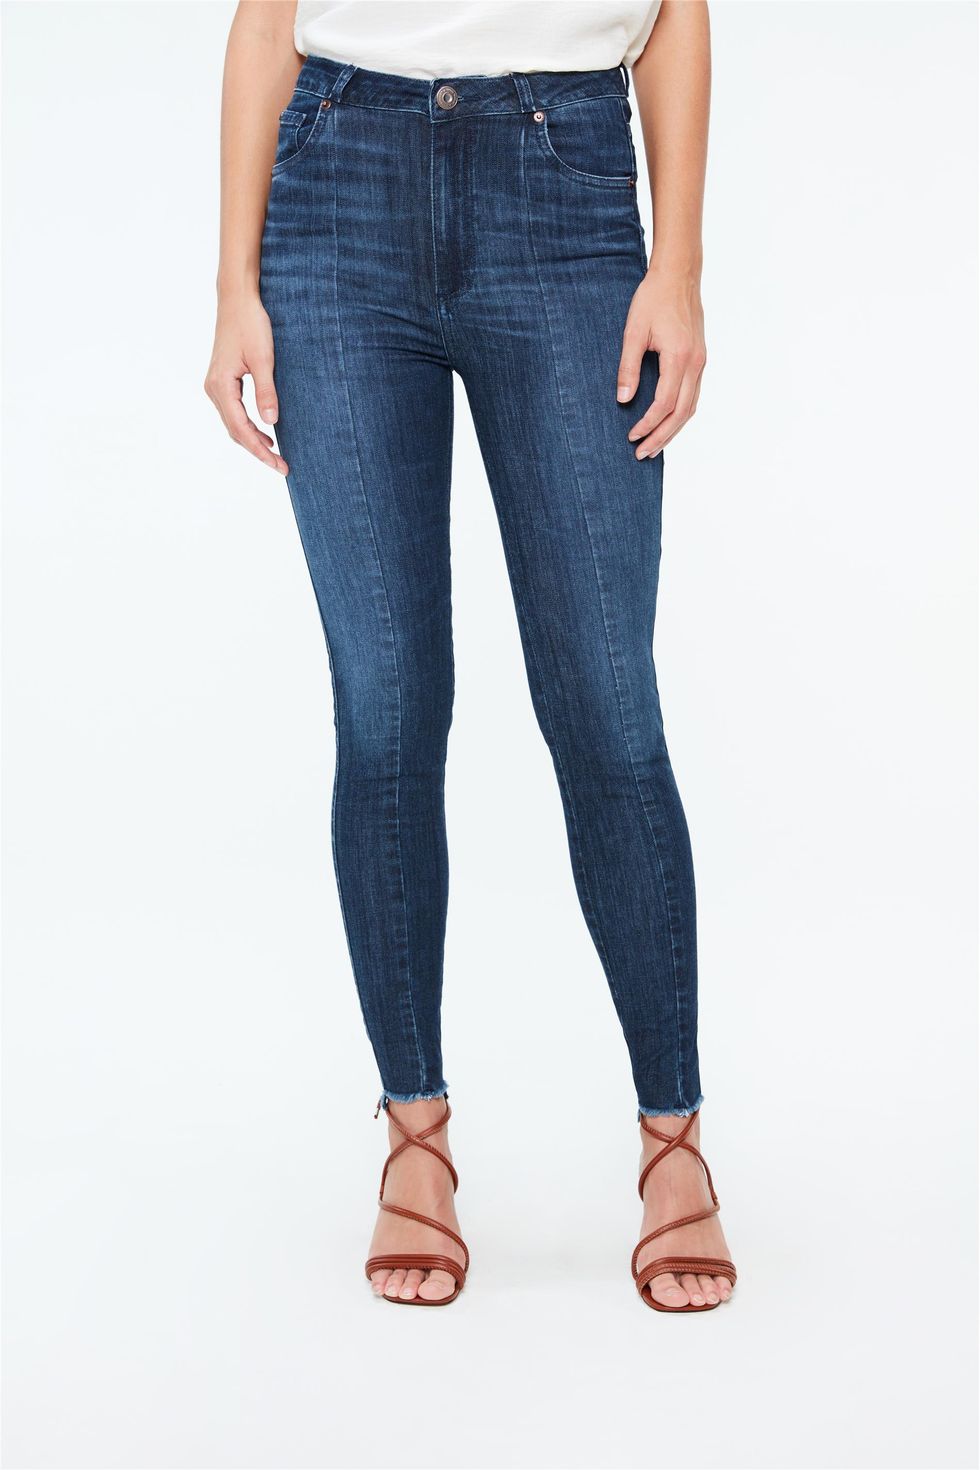 calça jeans cintura alta skinny